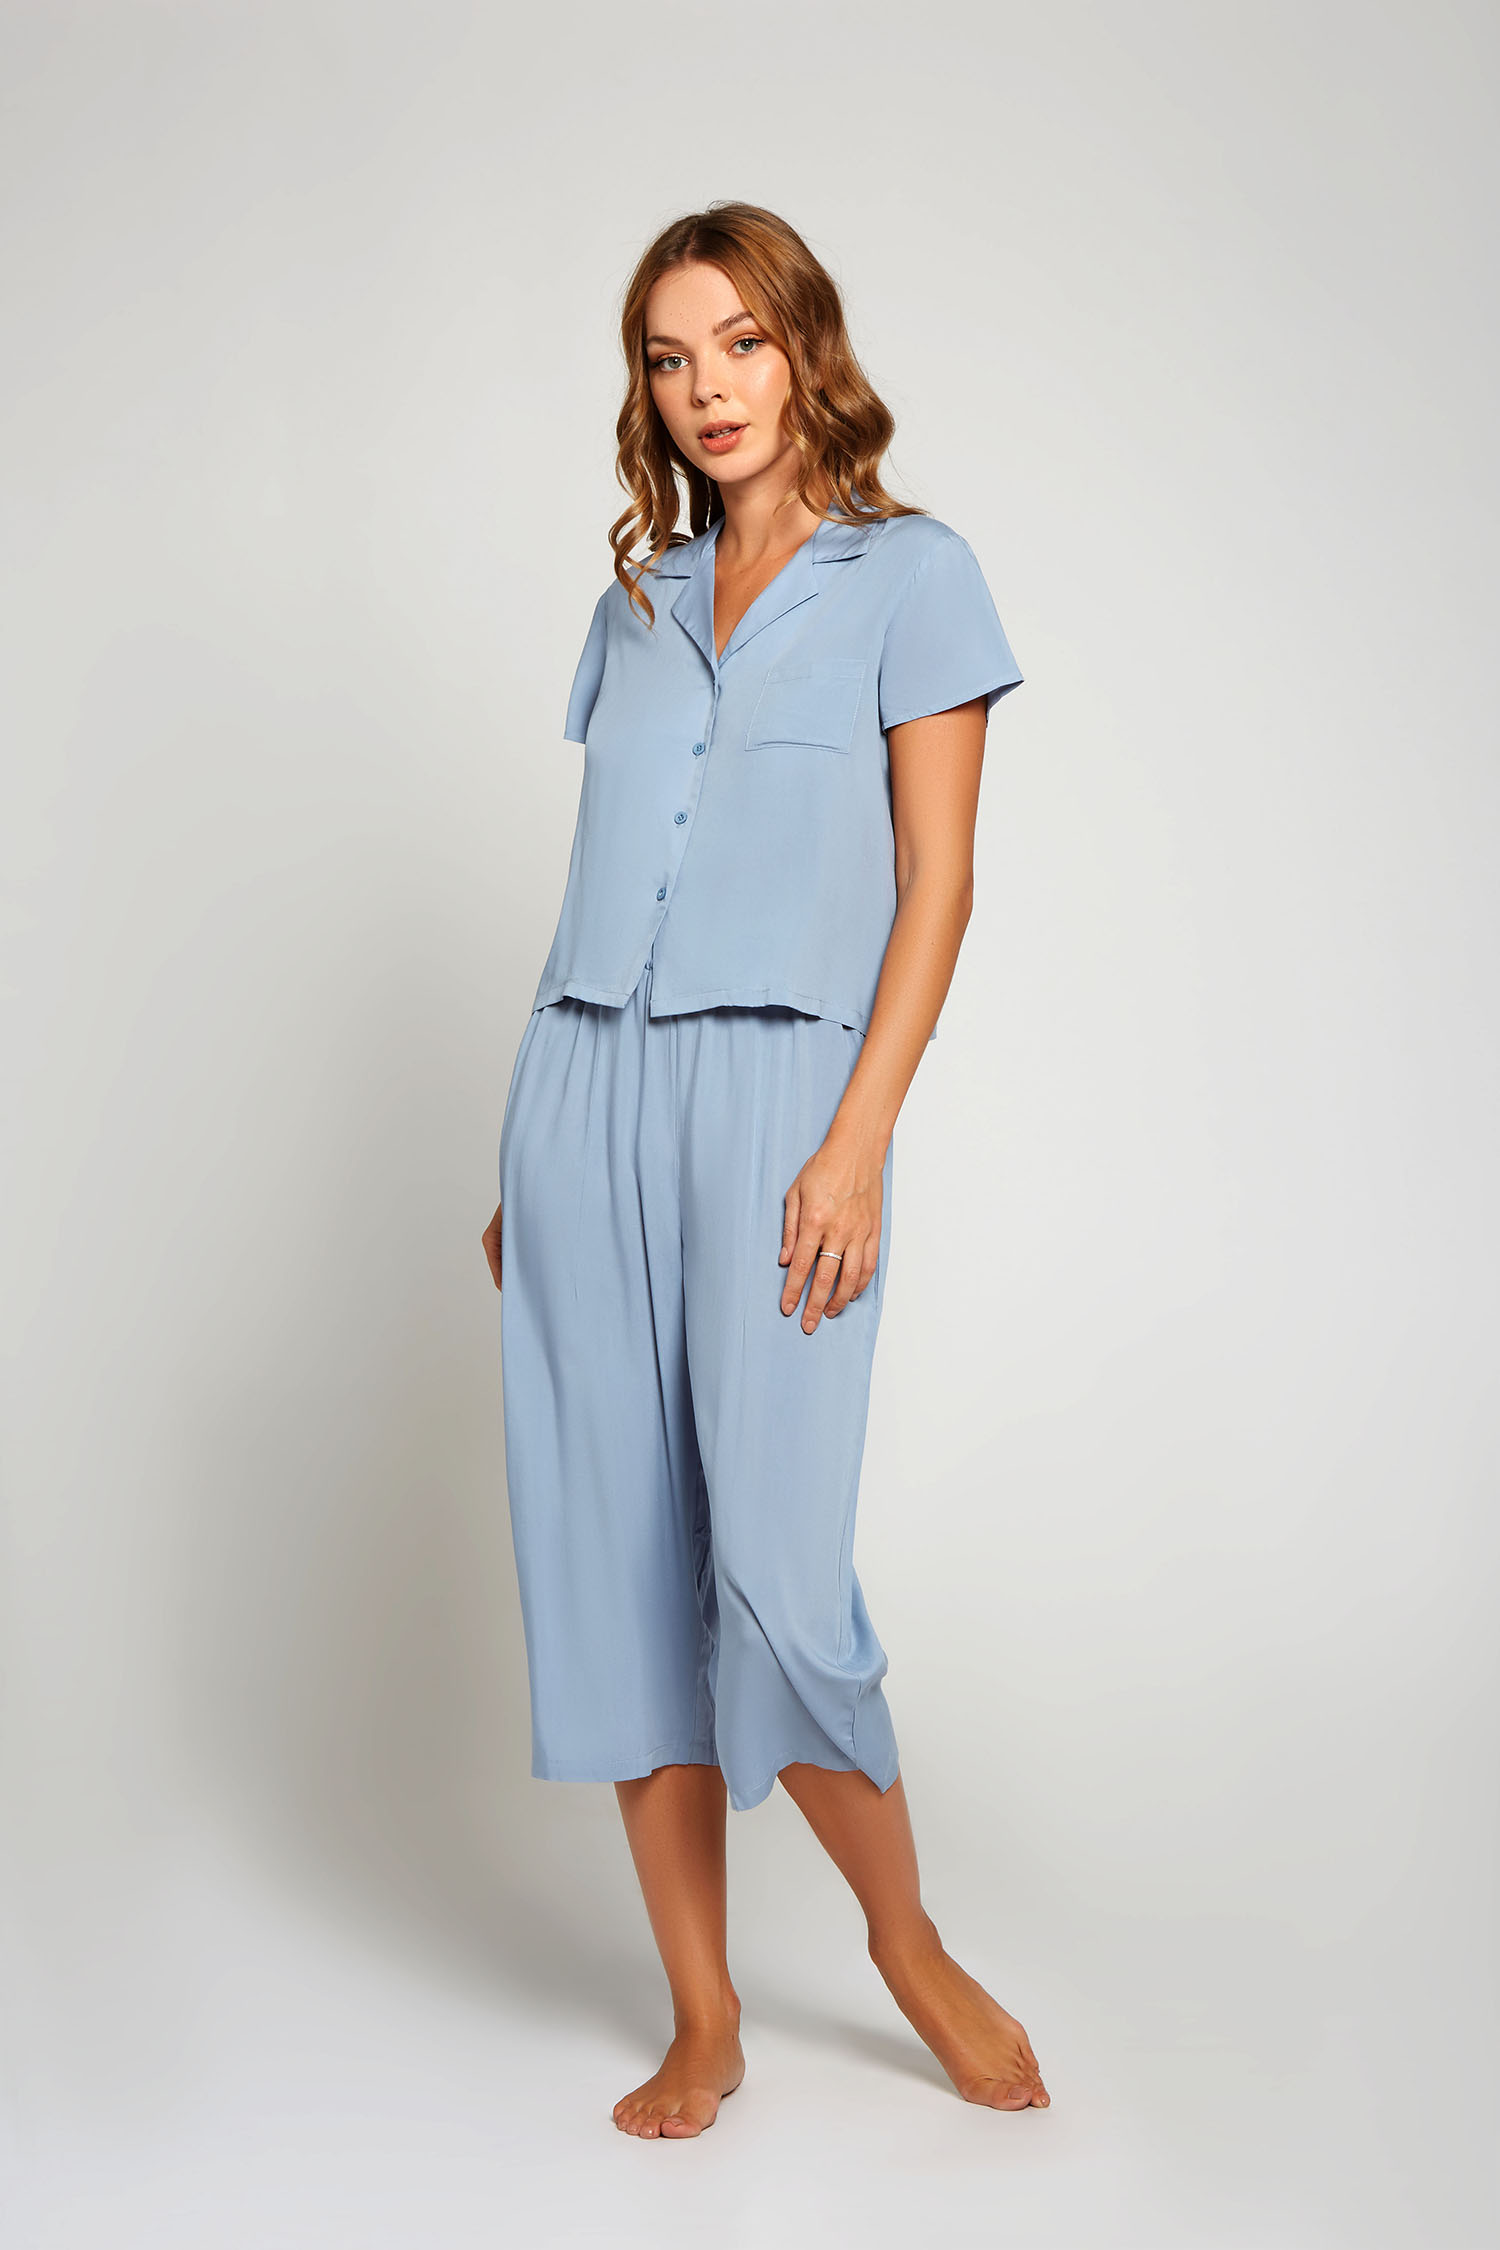 Renee Pajama Top - 78075 Blue